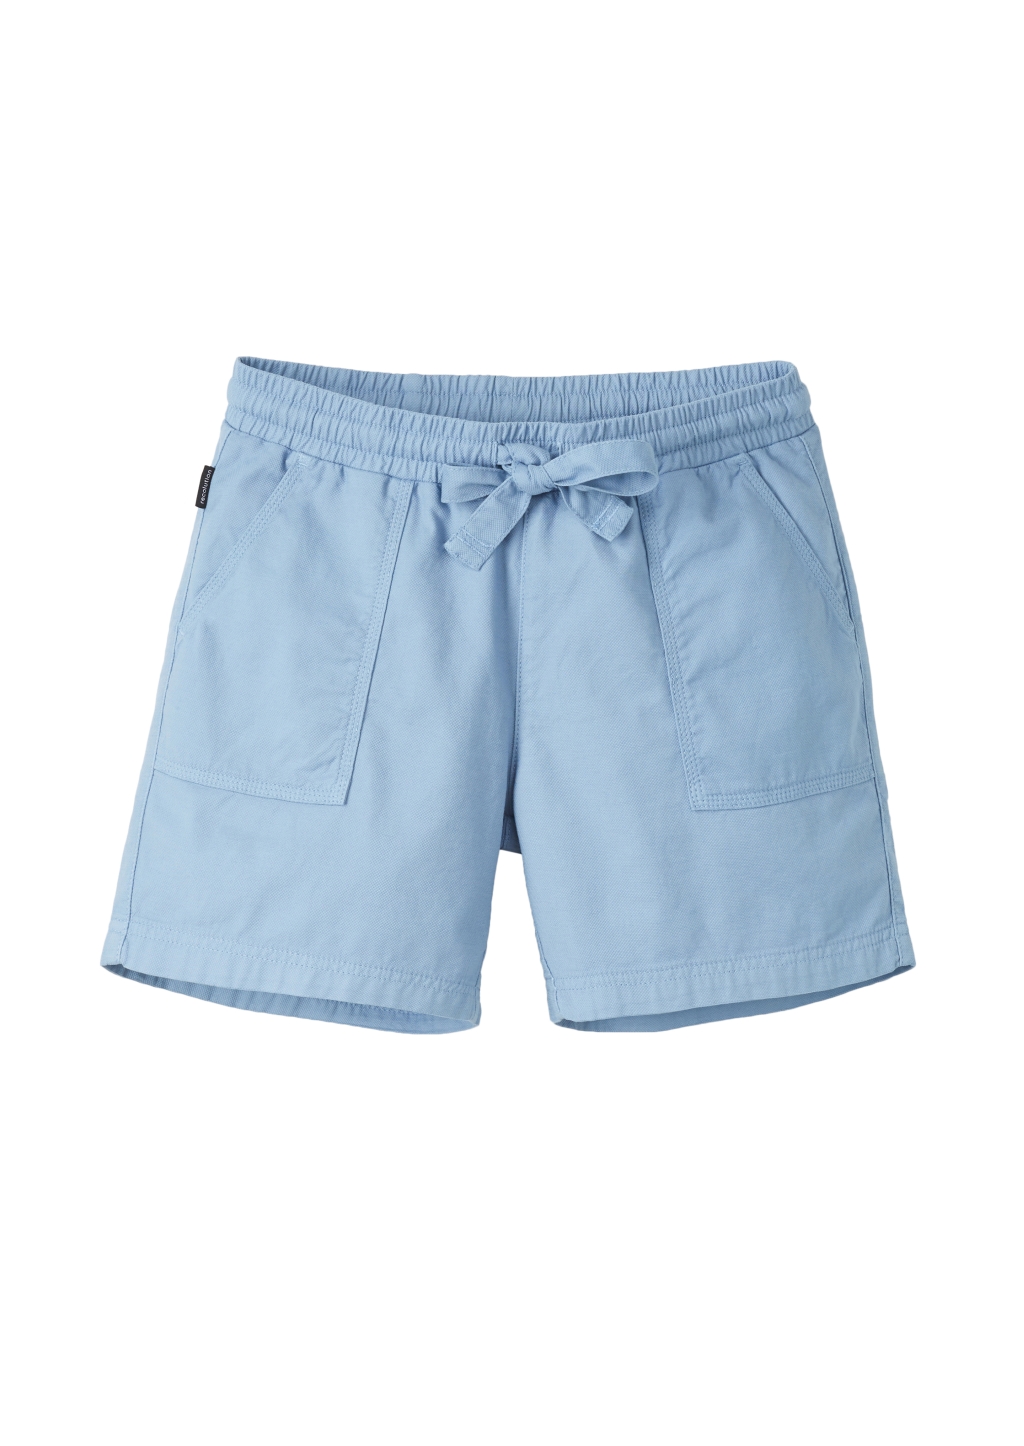 Männer Shorts summer blue XL